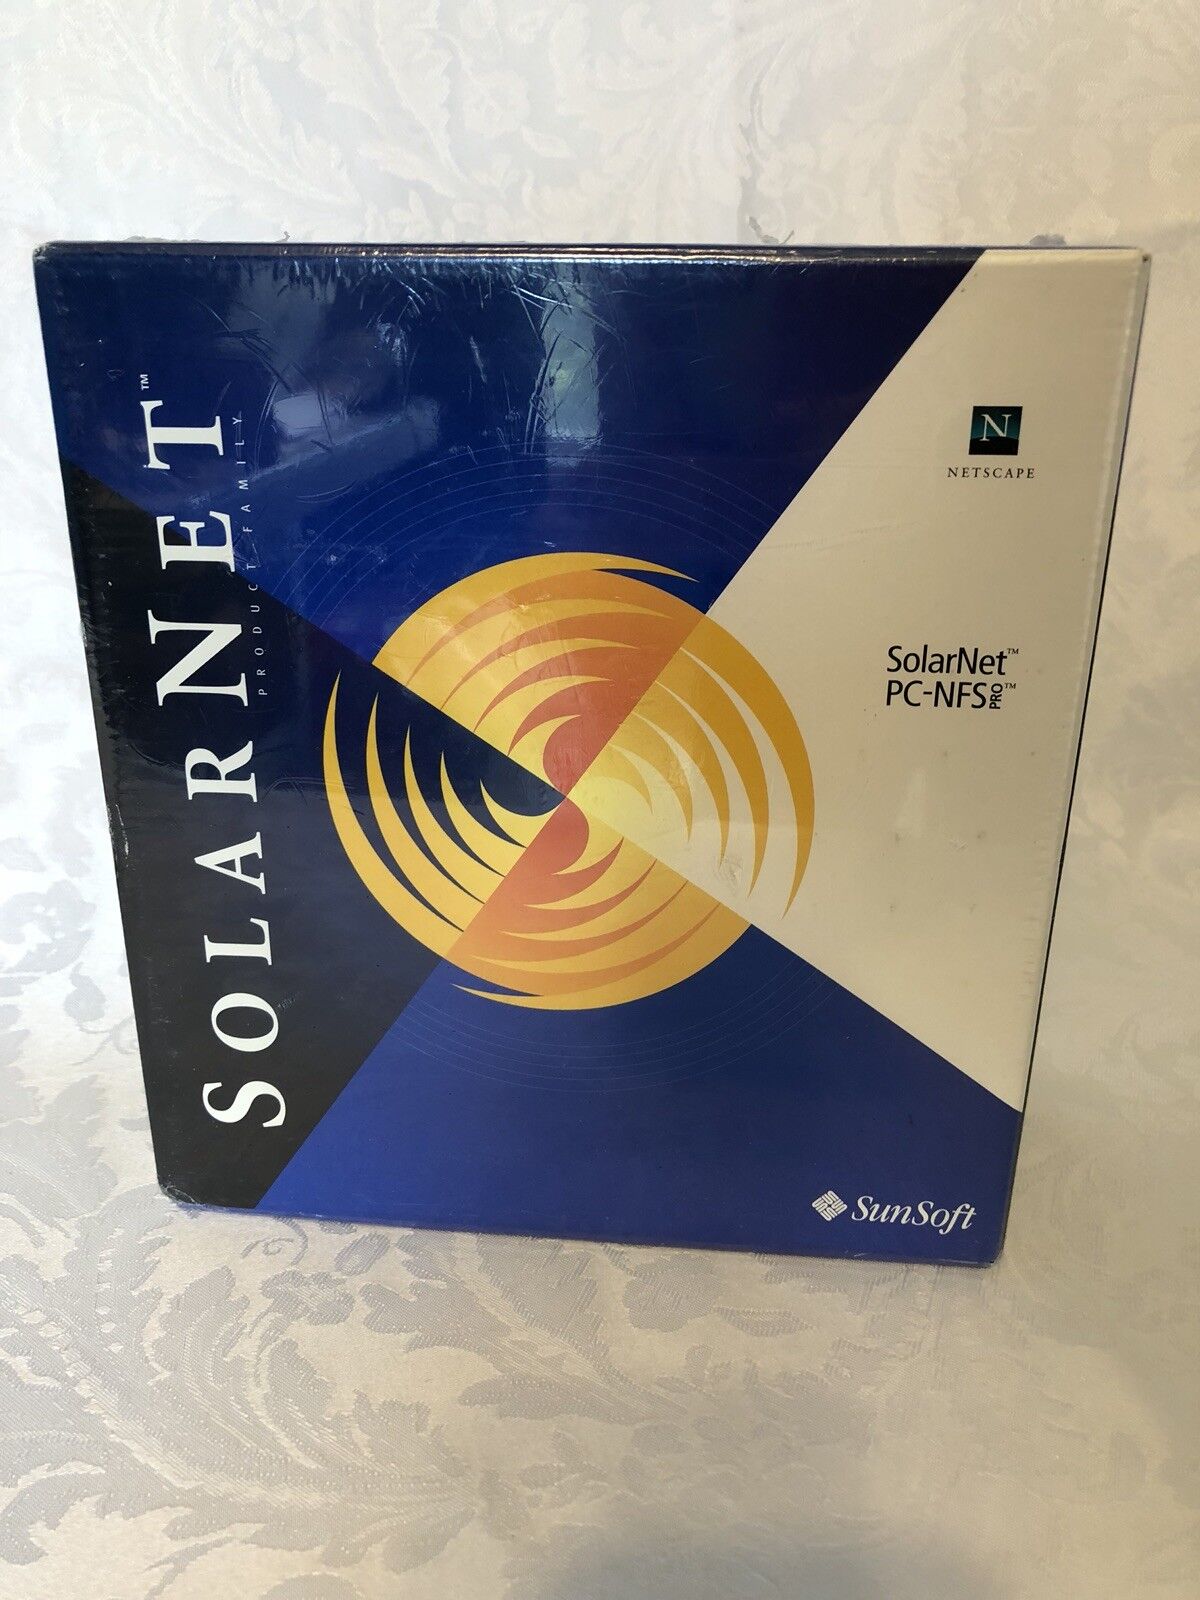 SunSoft SolarNet Family PC-NFS Pro Netscape Sun Microsystems Vintage Sealed New